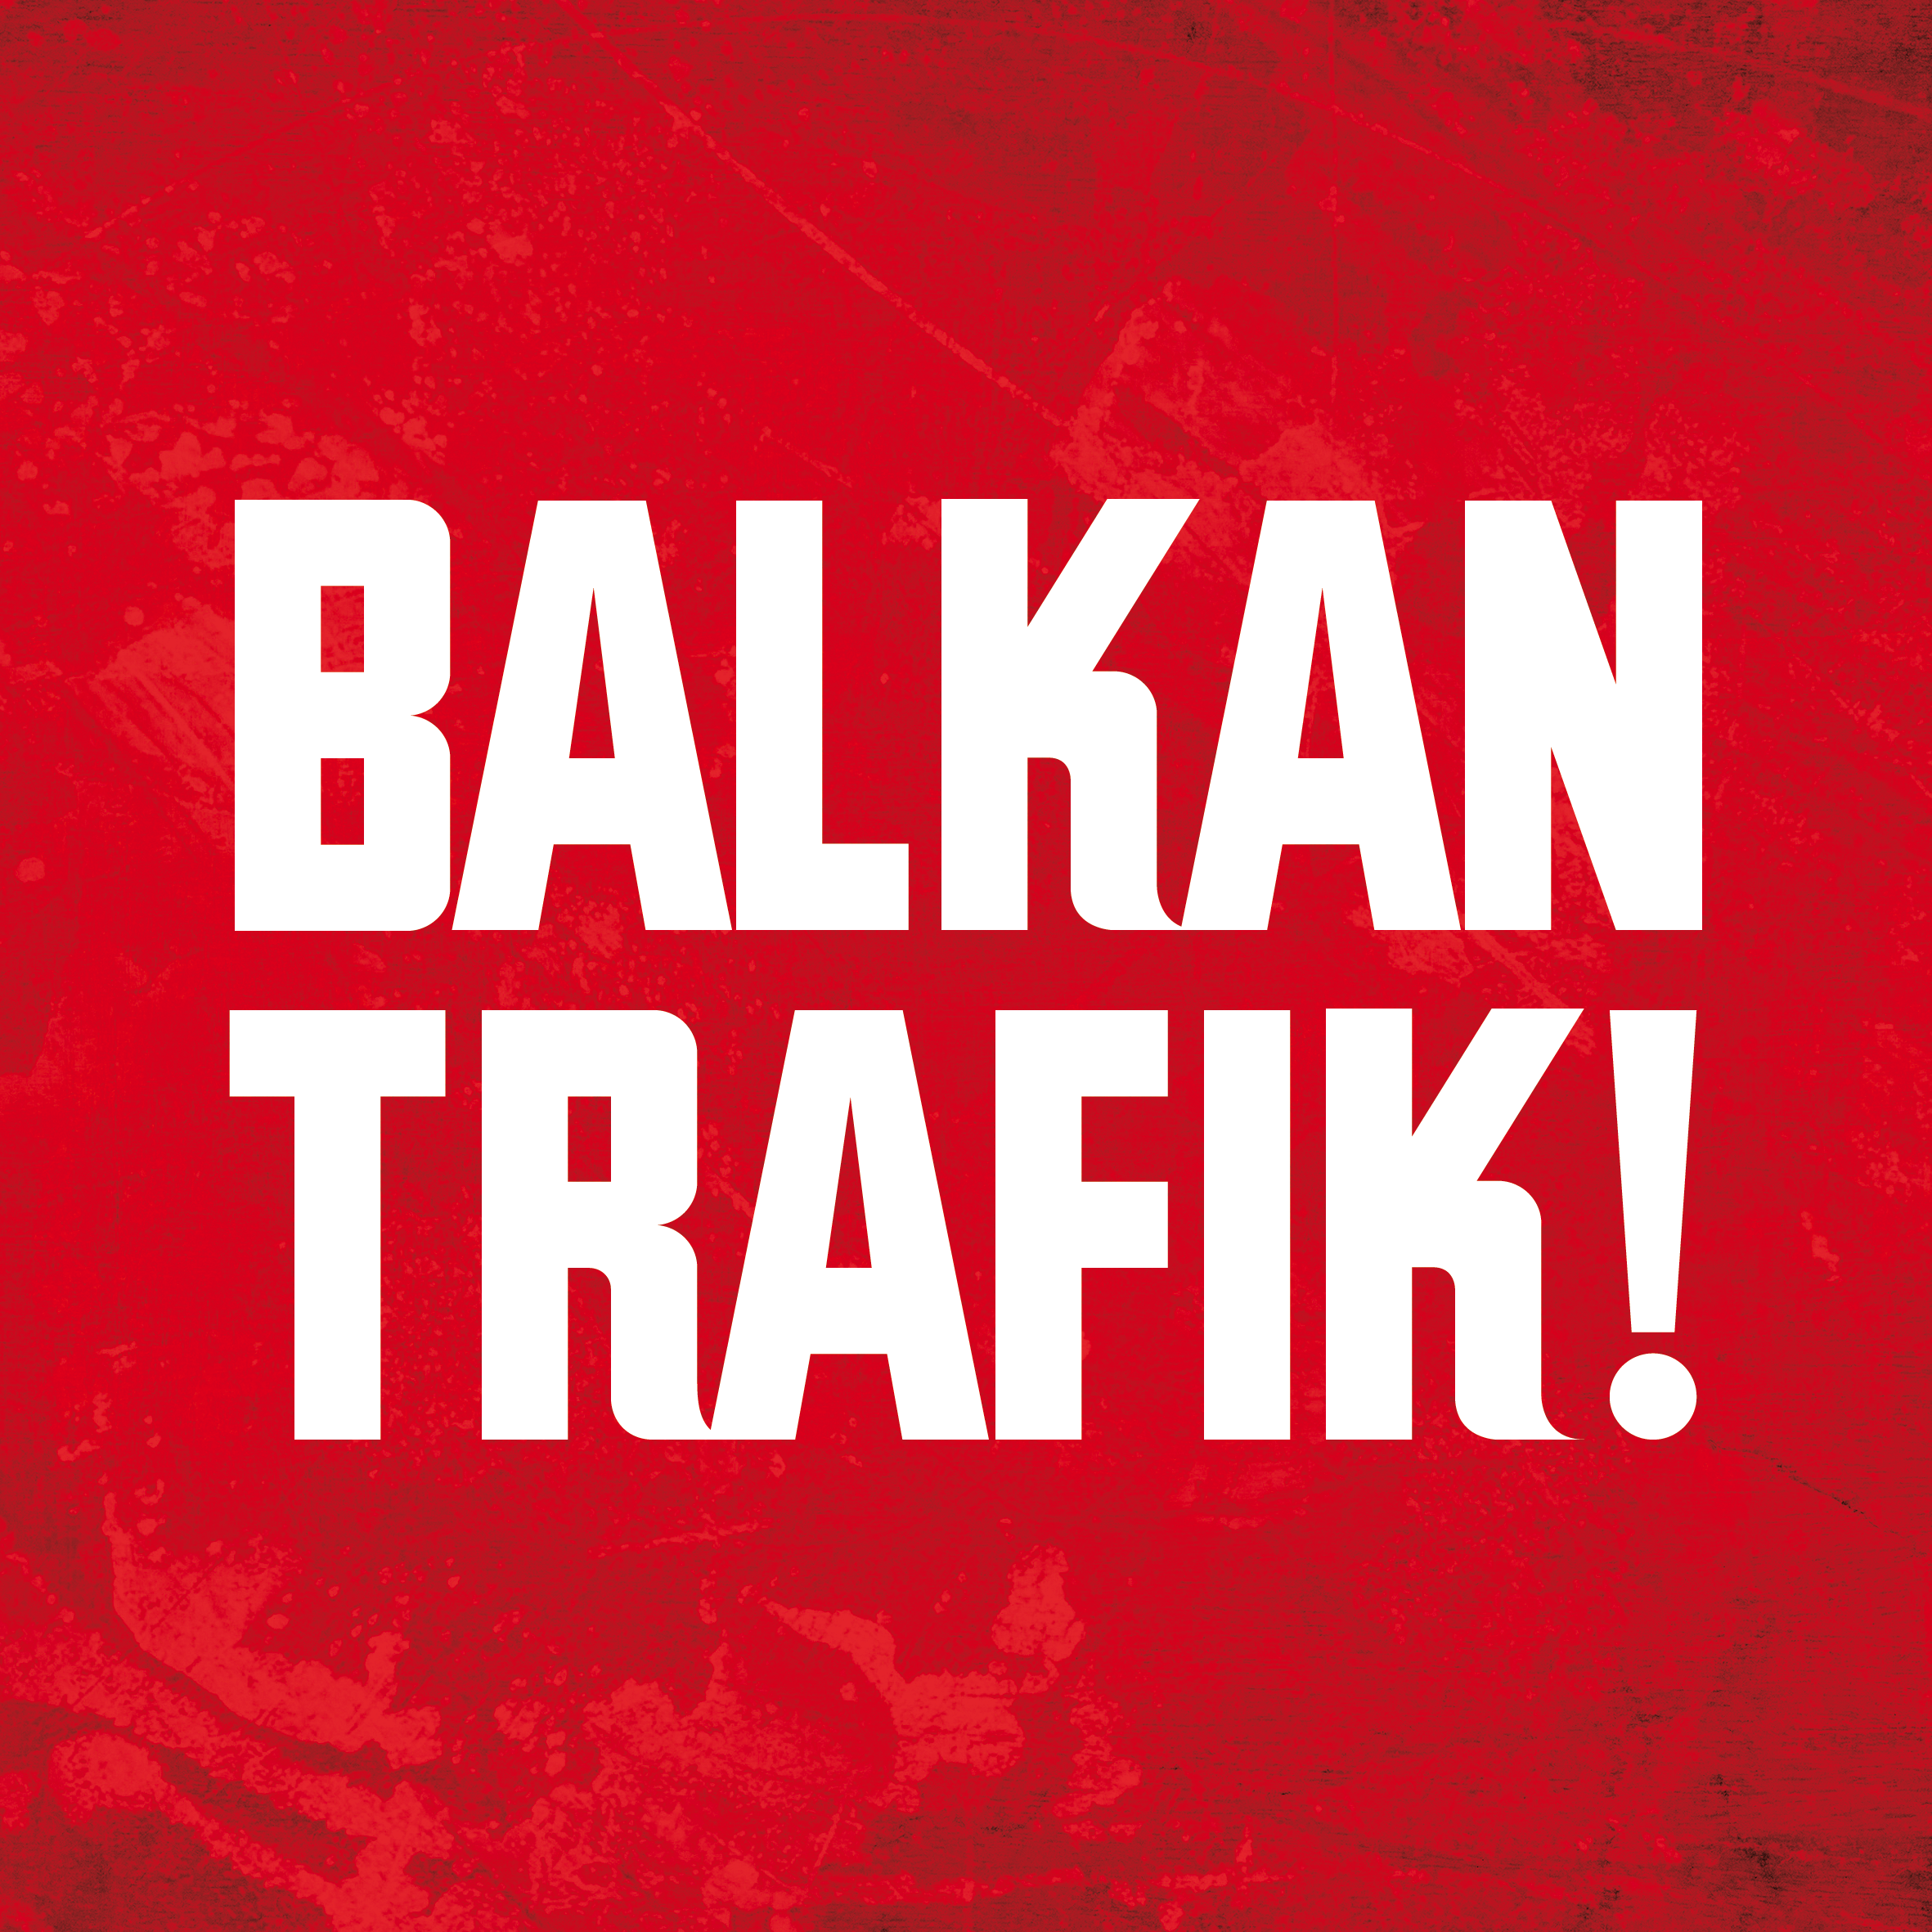 BALKAN TRAFIK! logo